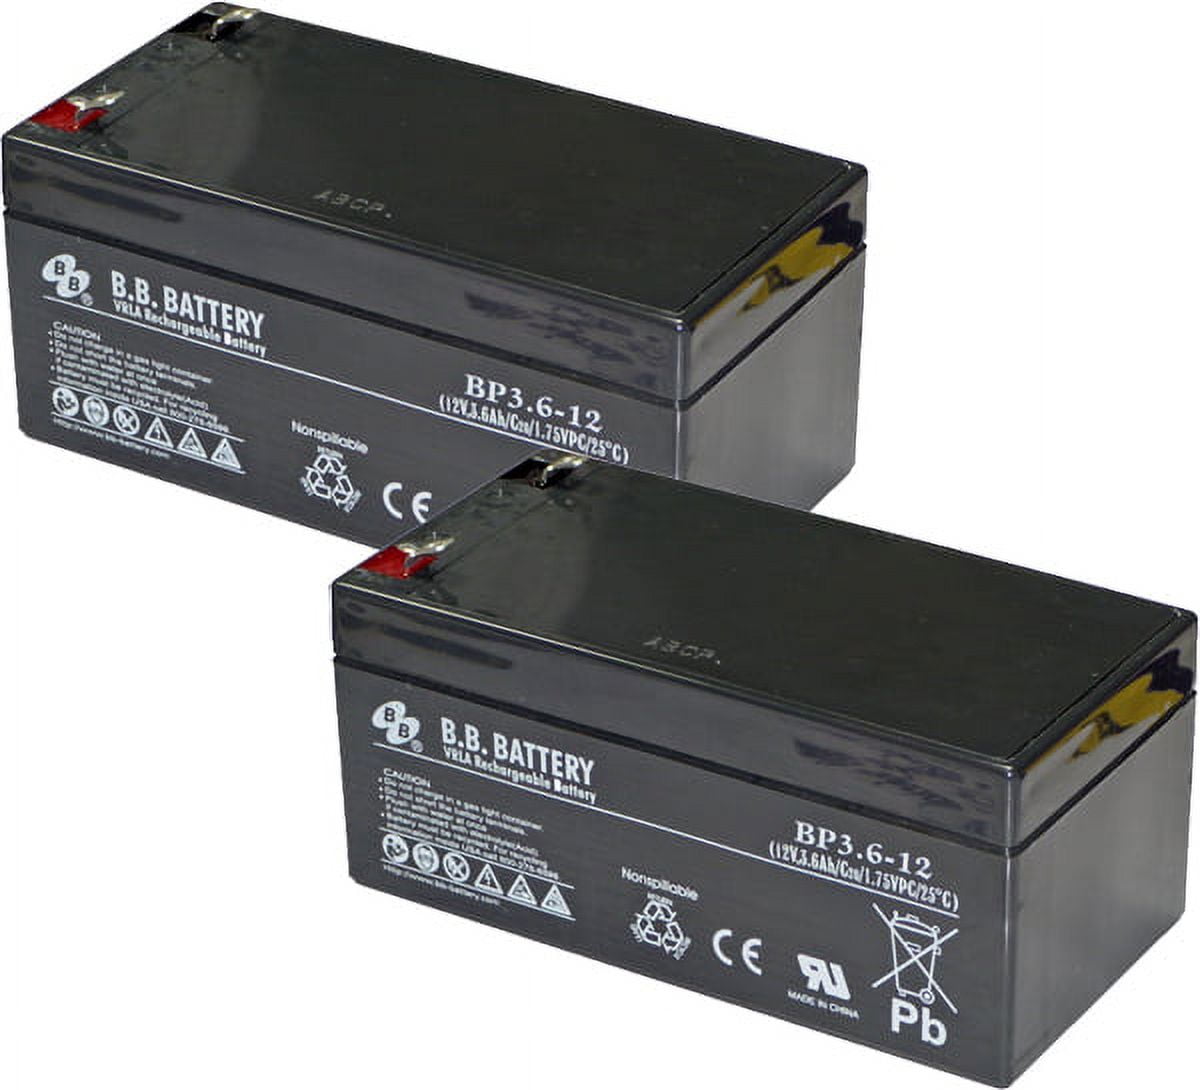 NEW Black & Decker VersaPak VP135 Starter Kit with Two 3.6-Volt Batteries  SEALED